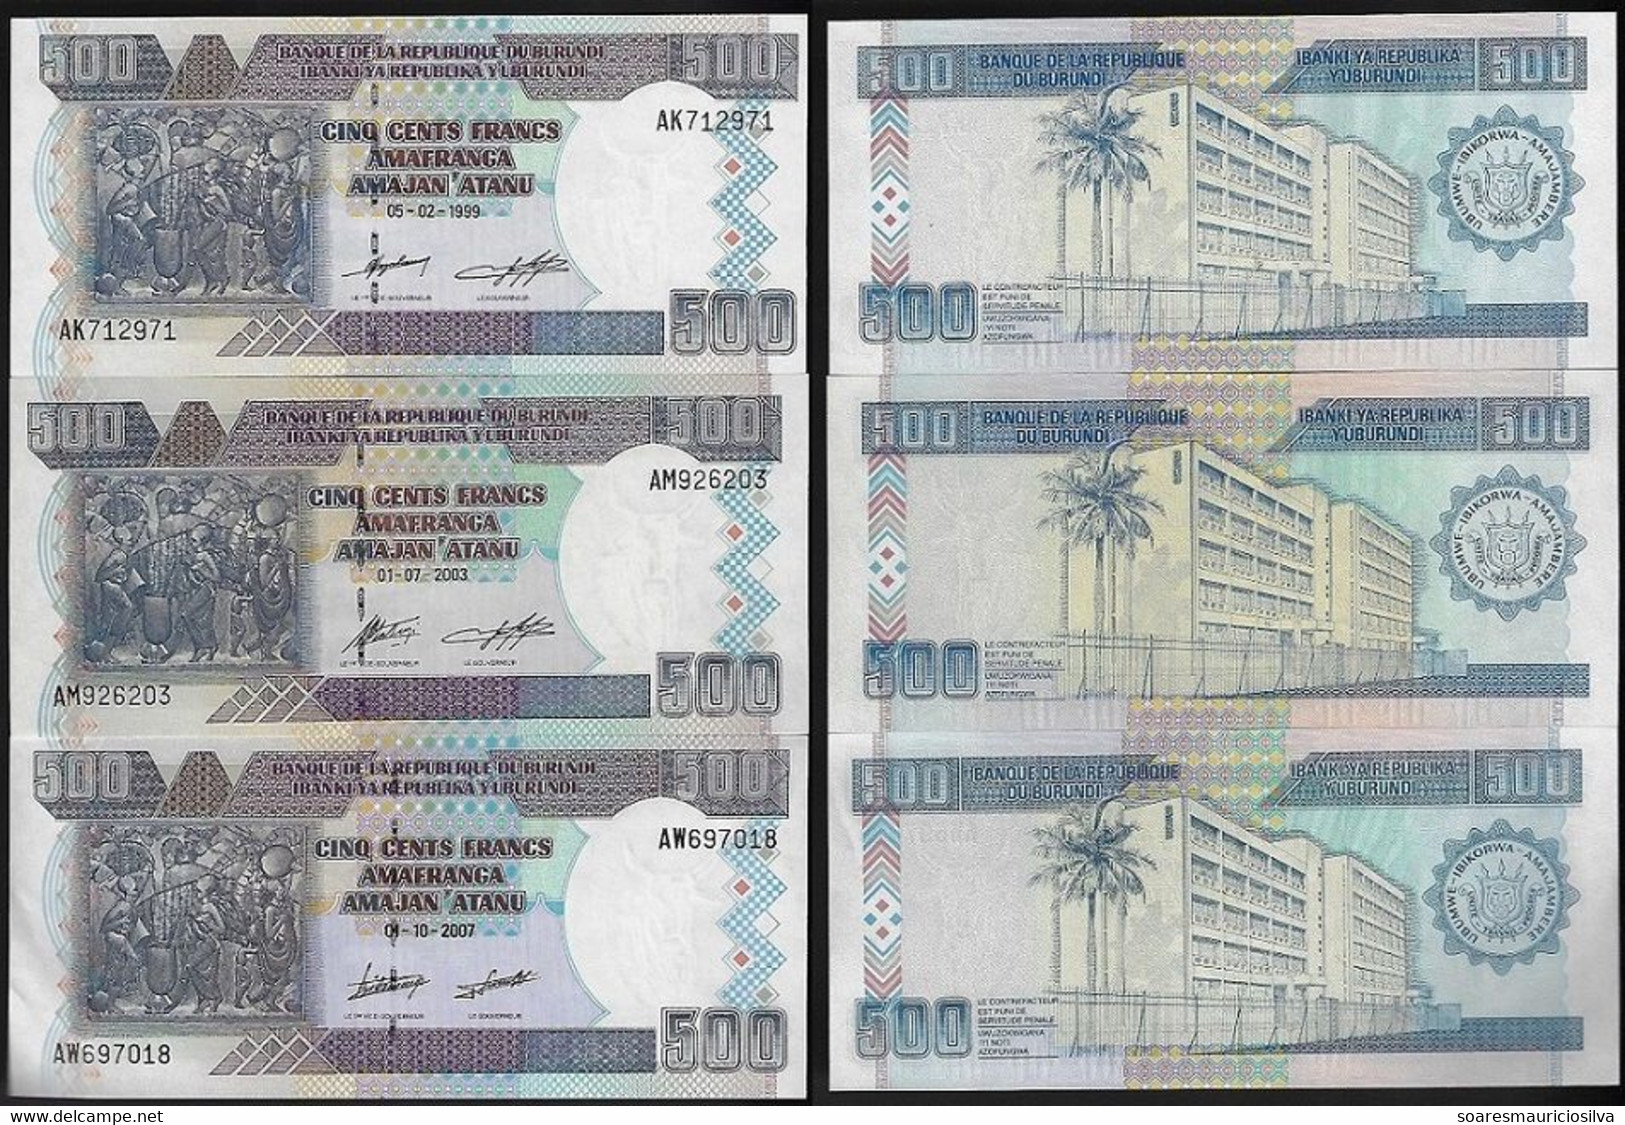 Banknote Burundi 500 Francs 1999 2003 2007 Pick-38b 38c 38d UNC (US$ 19.5) - Burundi